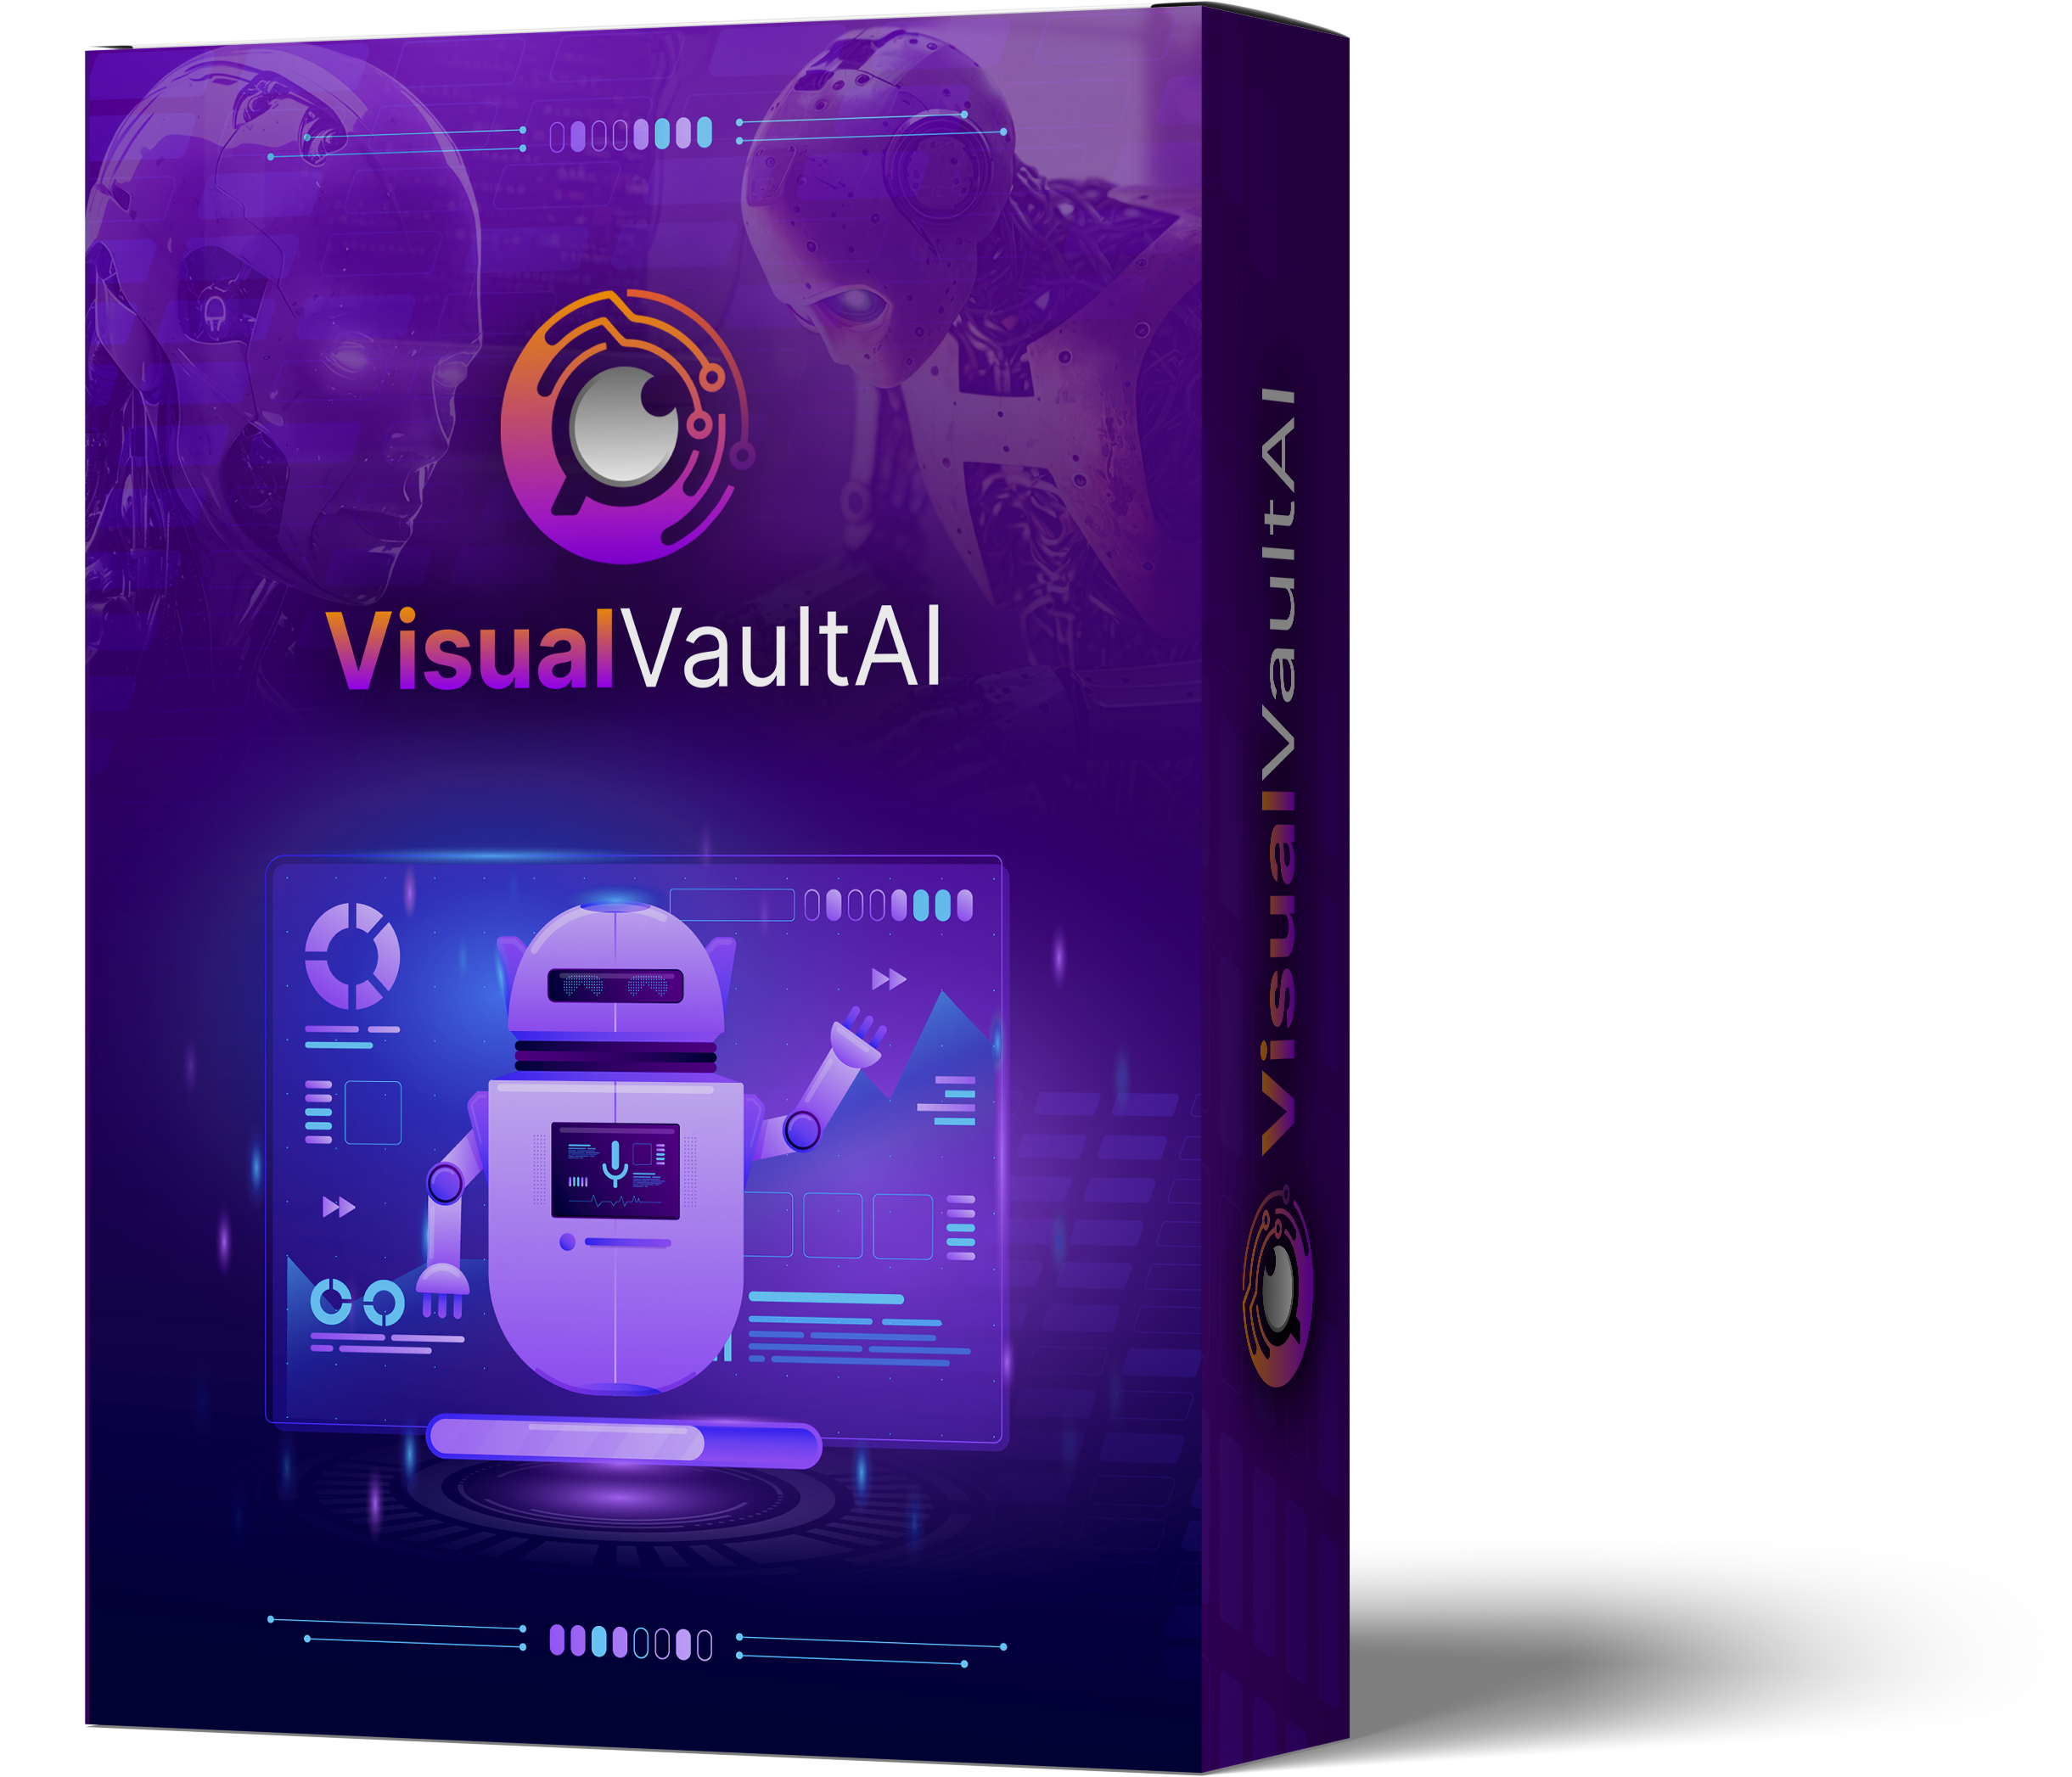 VisualVaultAI Review